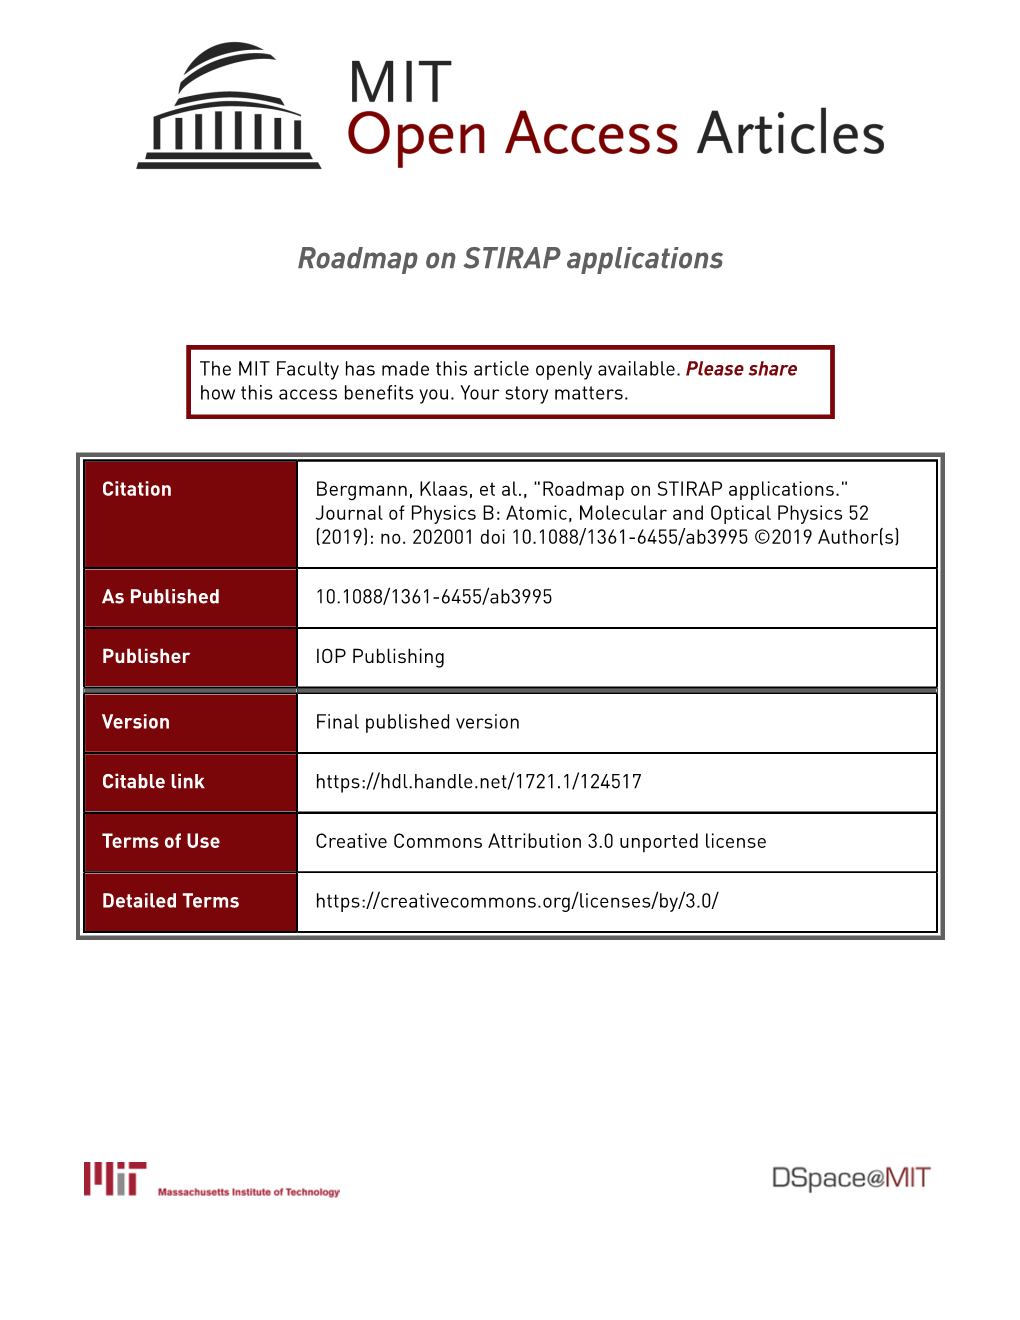 Roadmap on STIRAP Applications